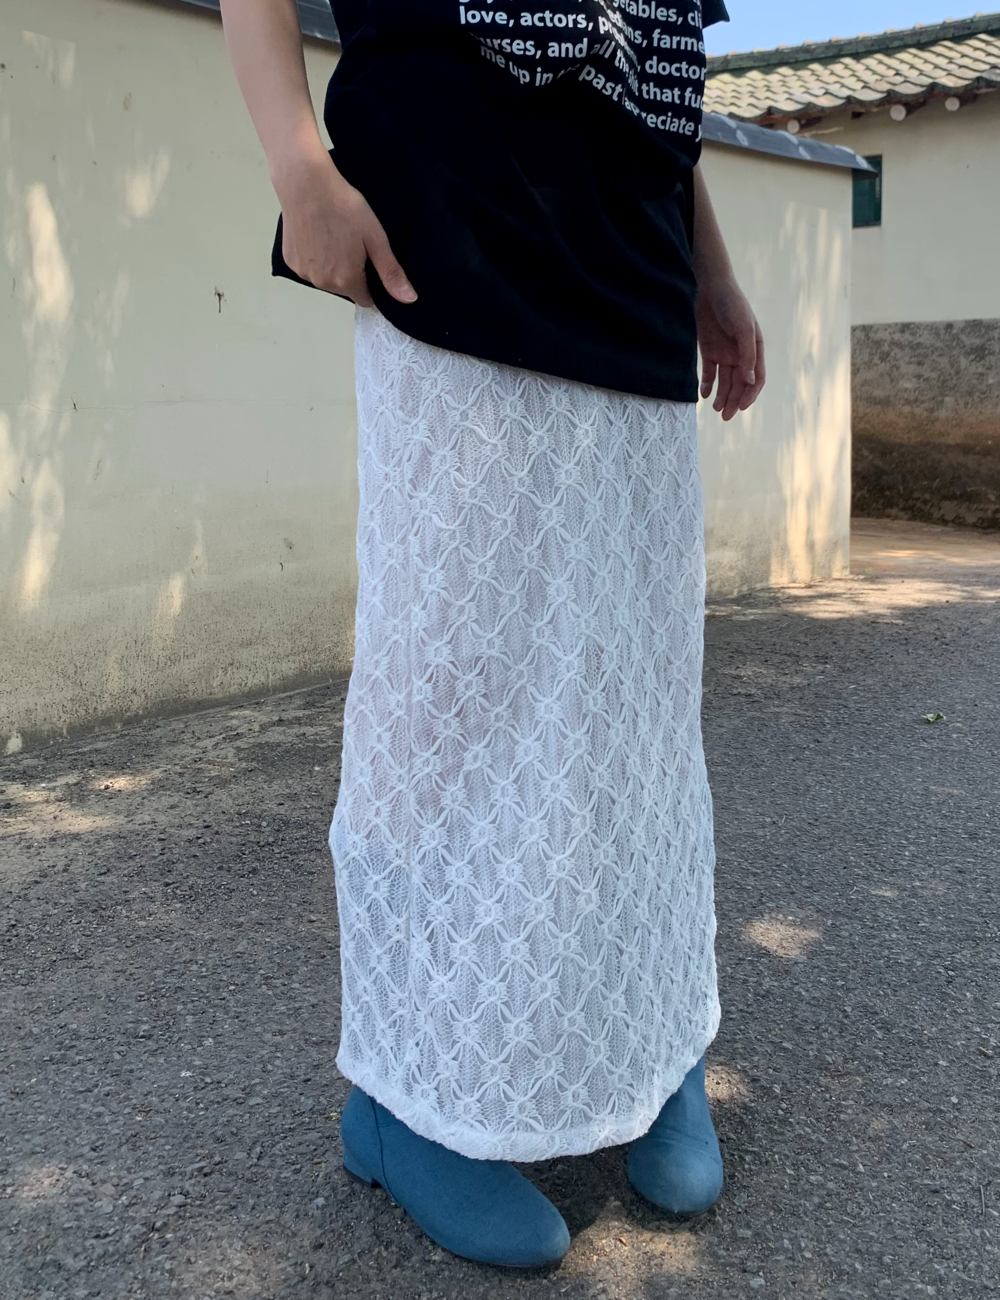 vintage long skirt